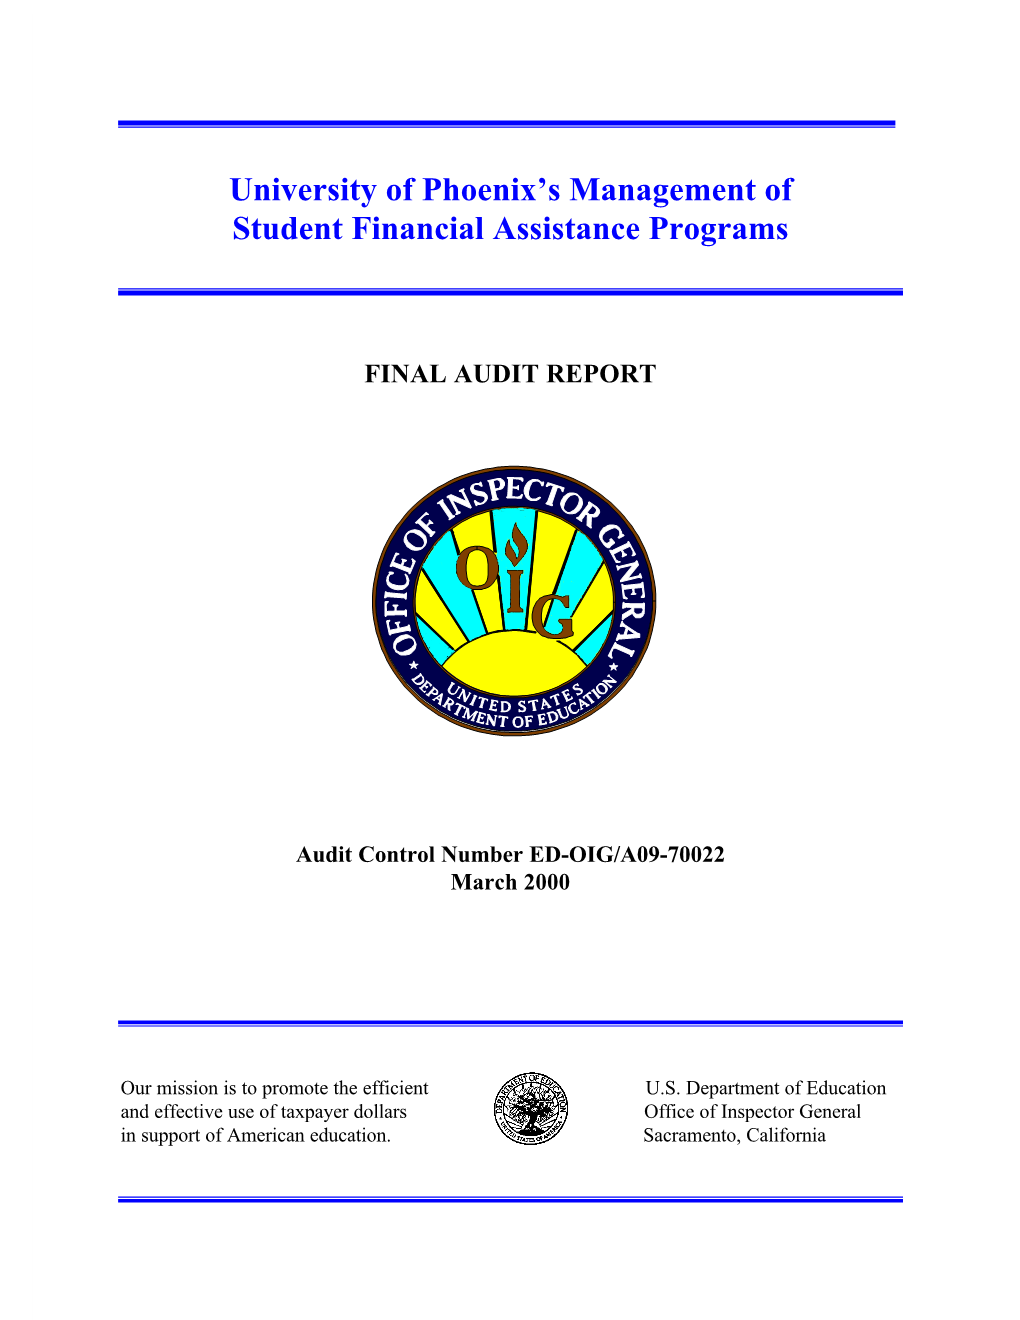 University of Phoenix's Management of Student Financial